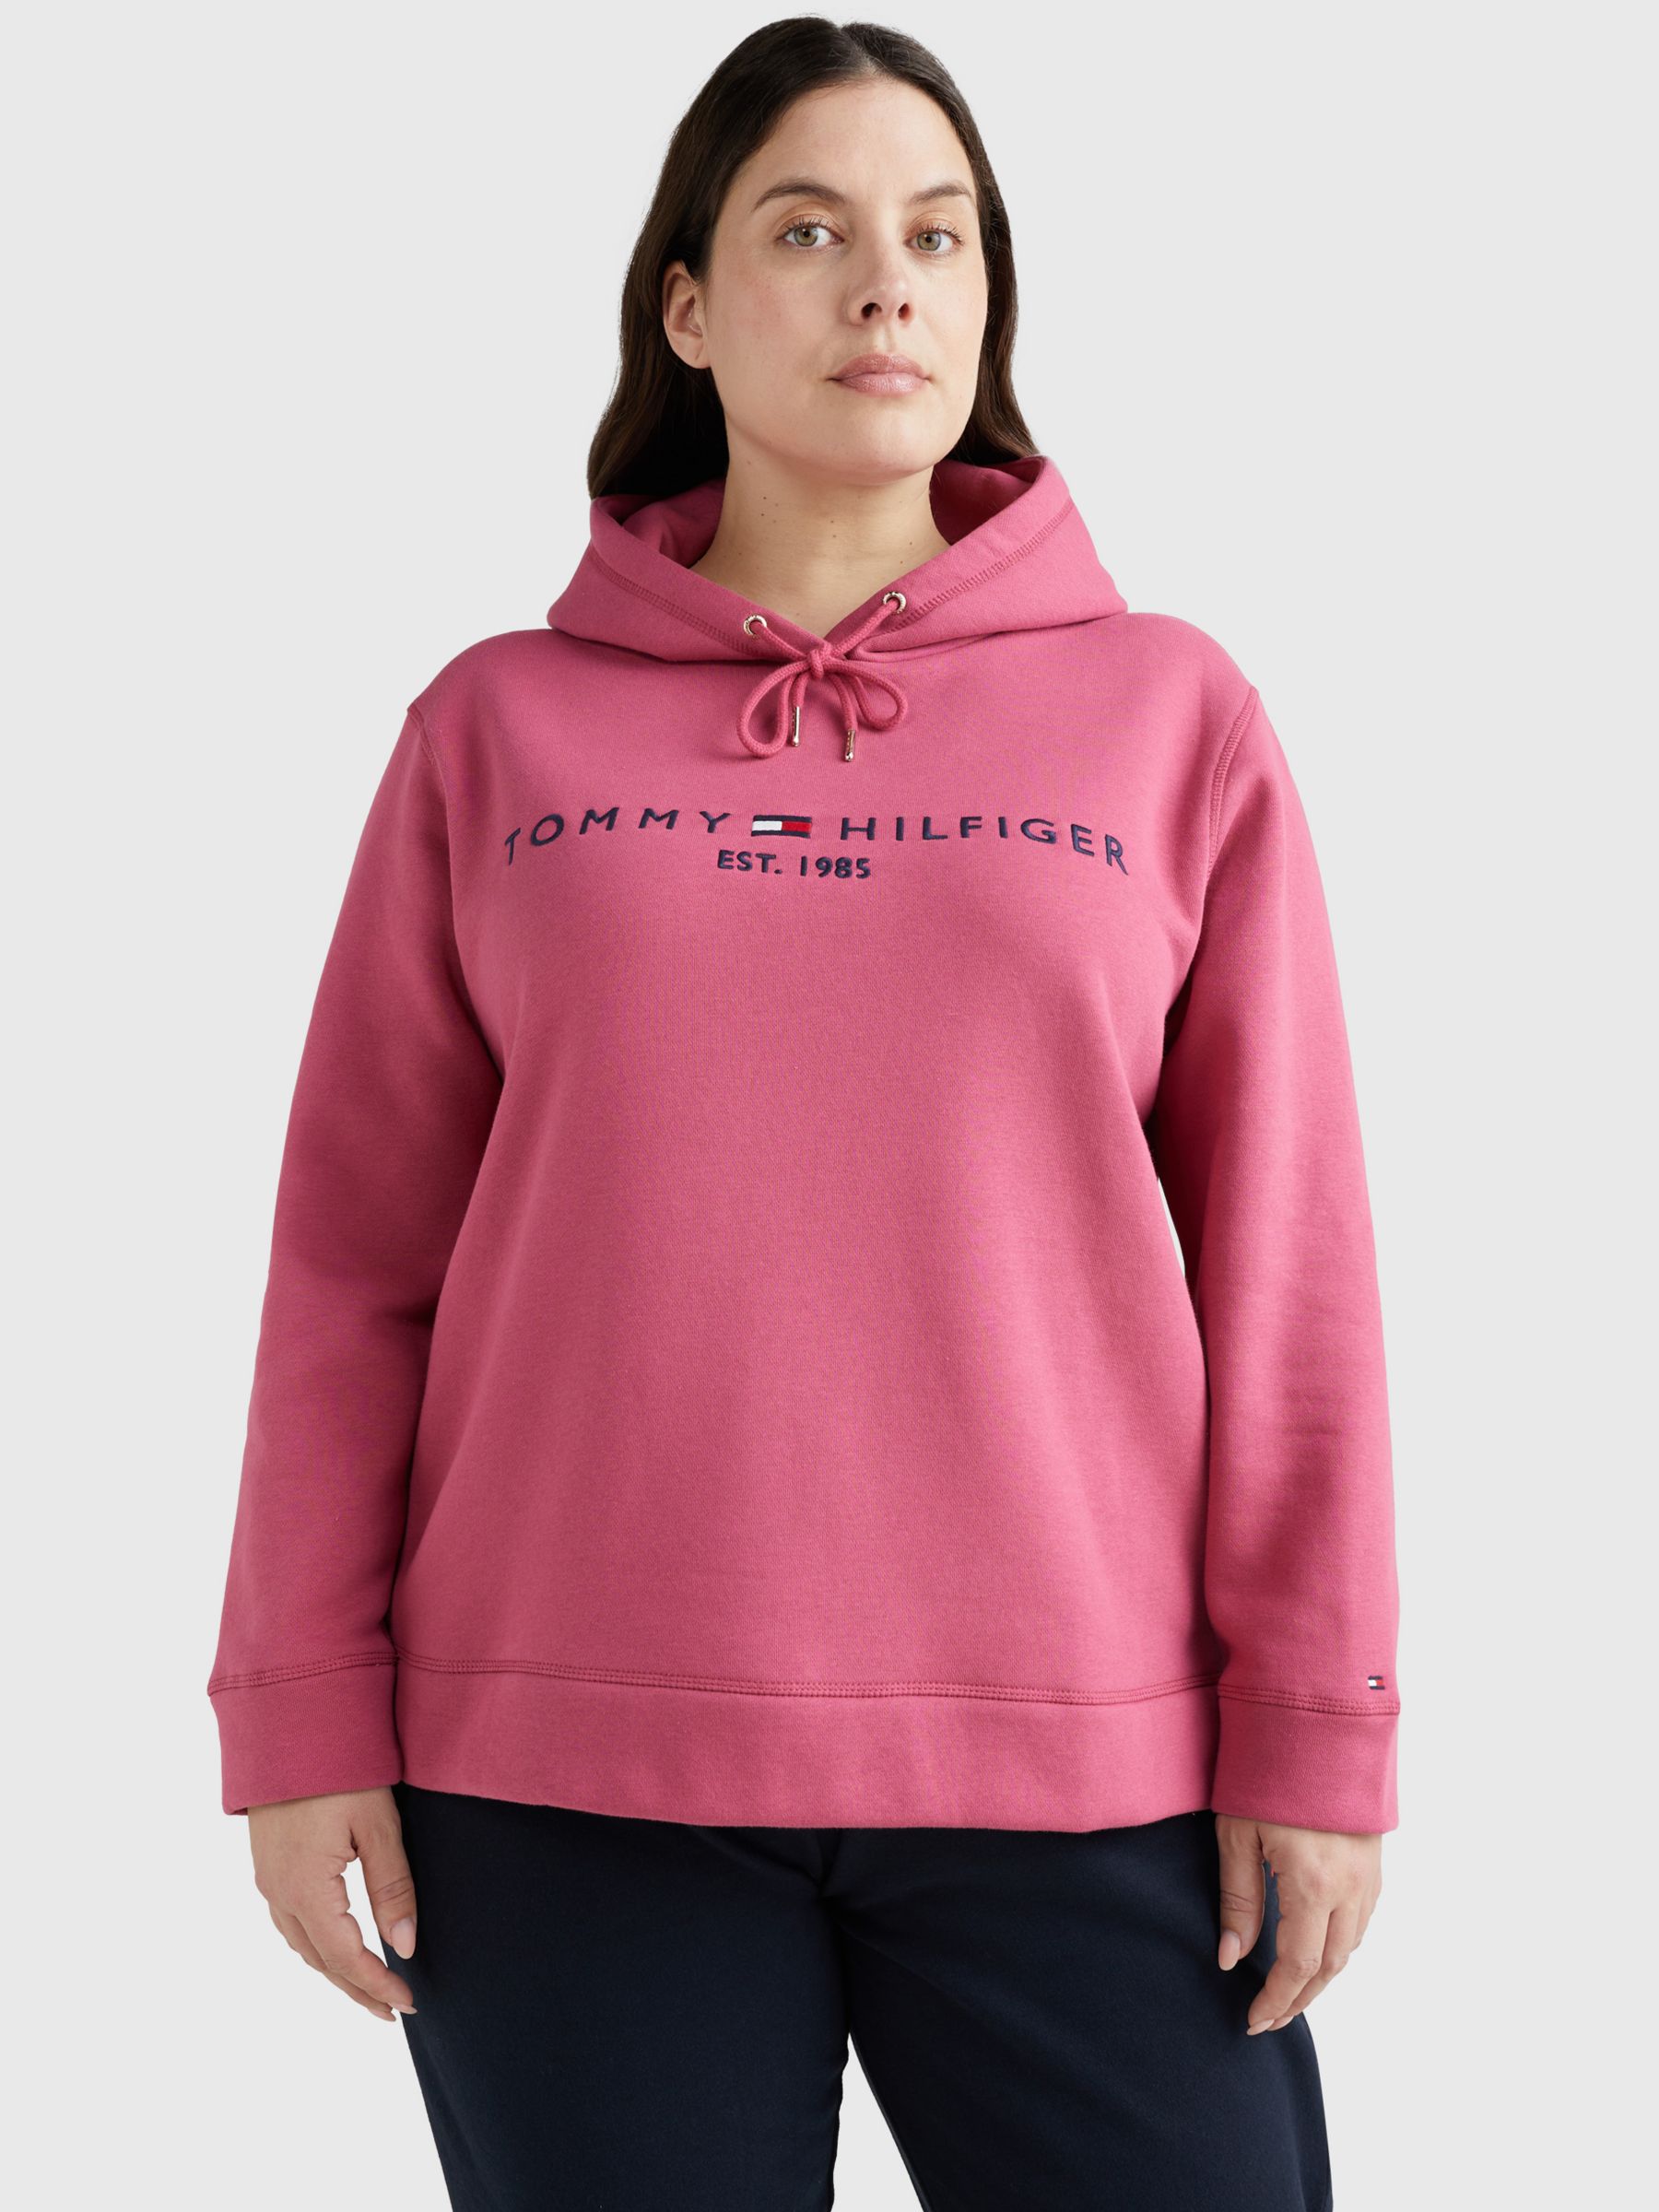 Tommy Hilfiger Women's TJW Small Logo Text T-Shirt, Pink, X-Large